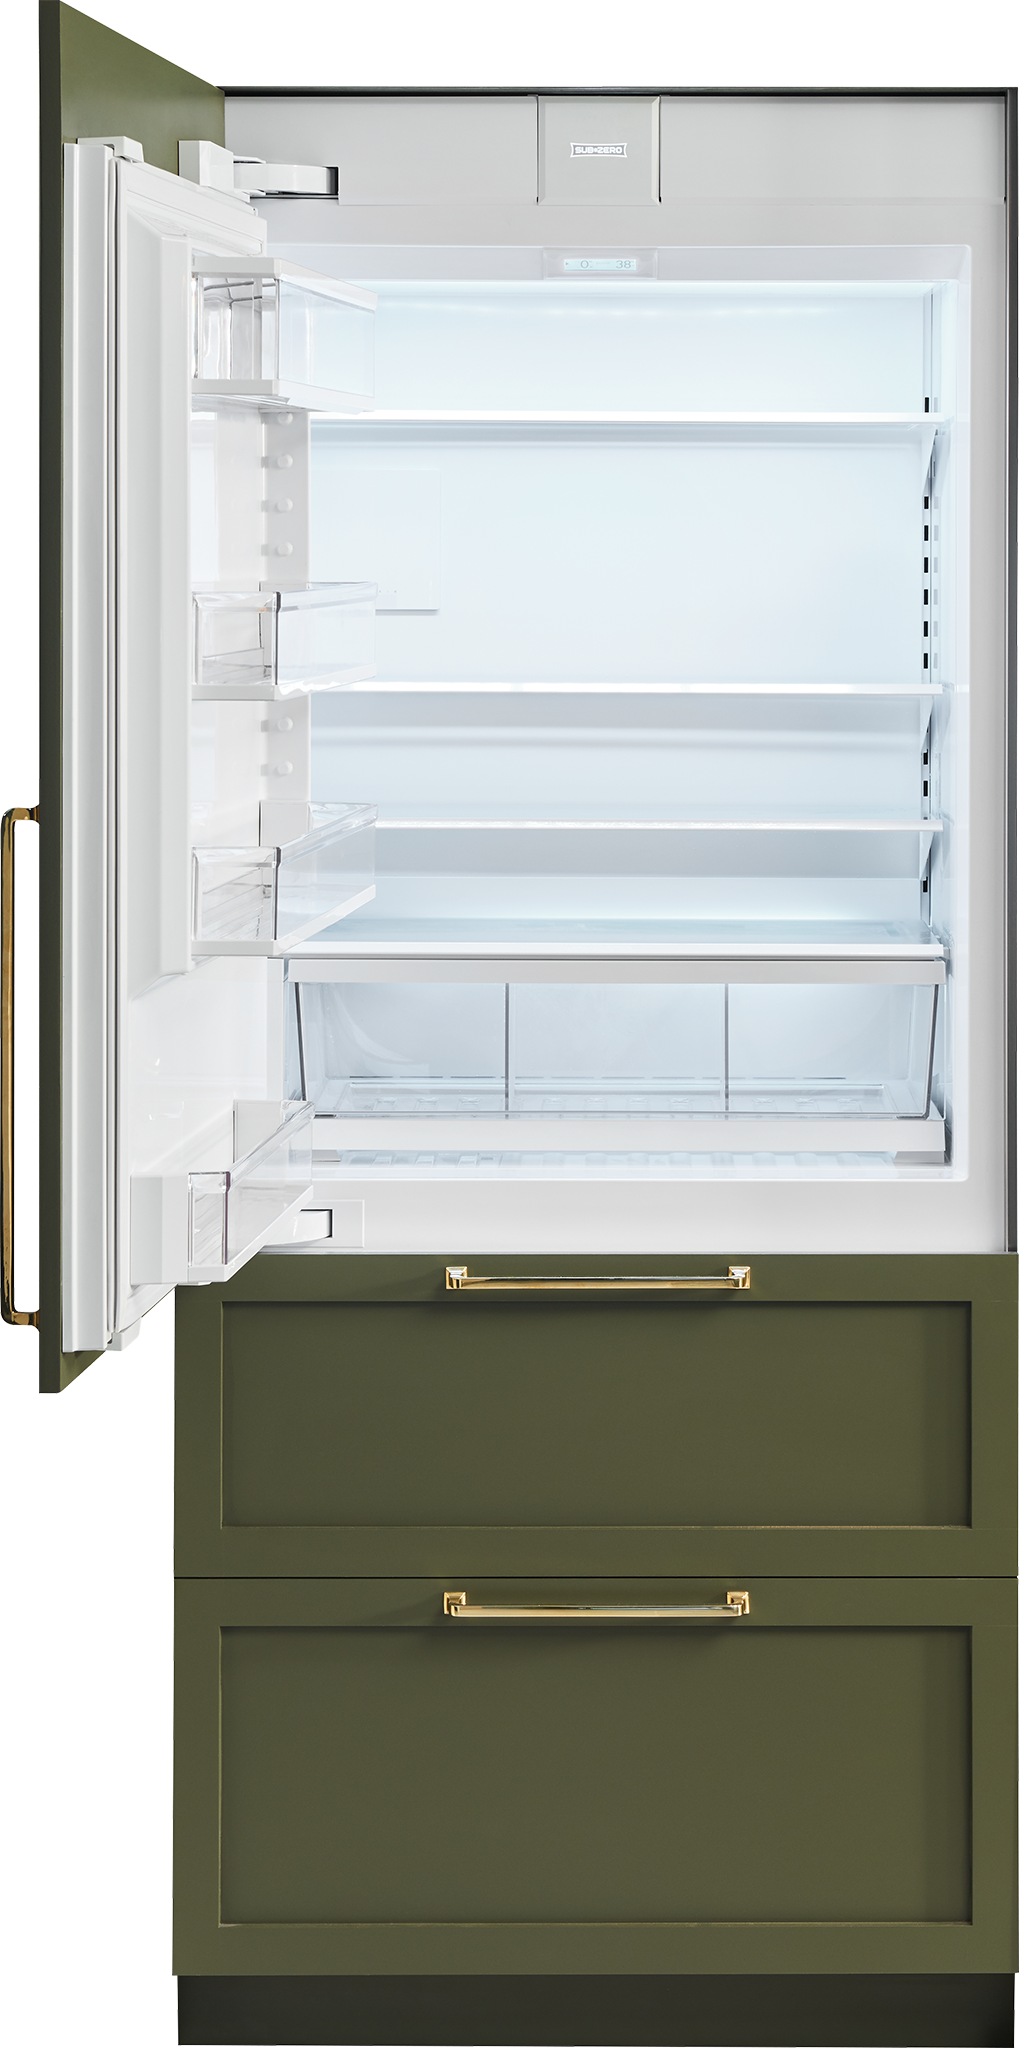 mini refrigerator with freezer